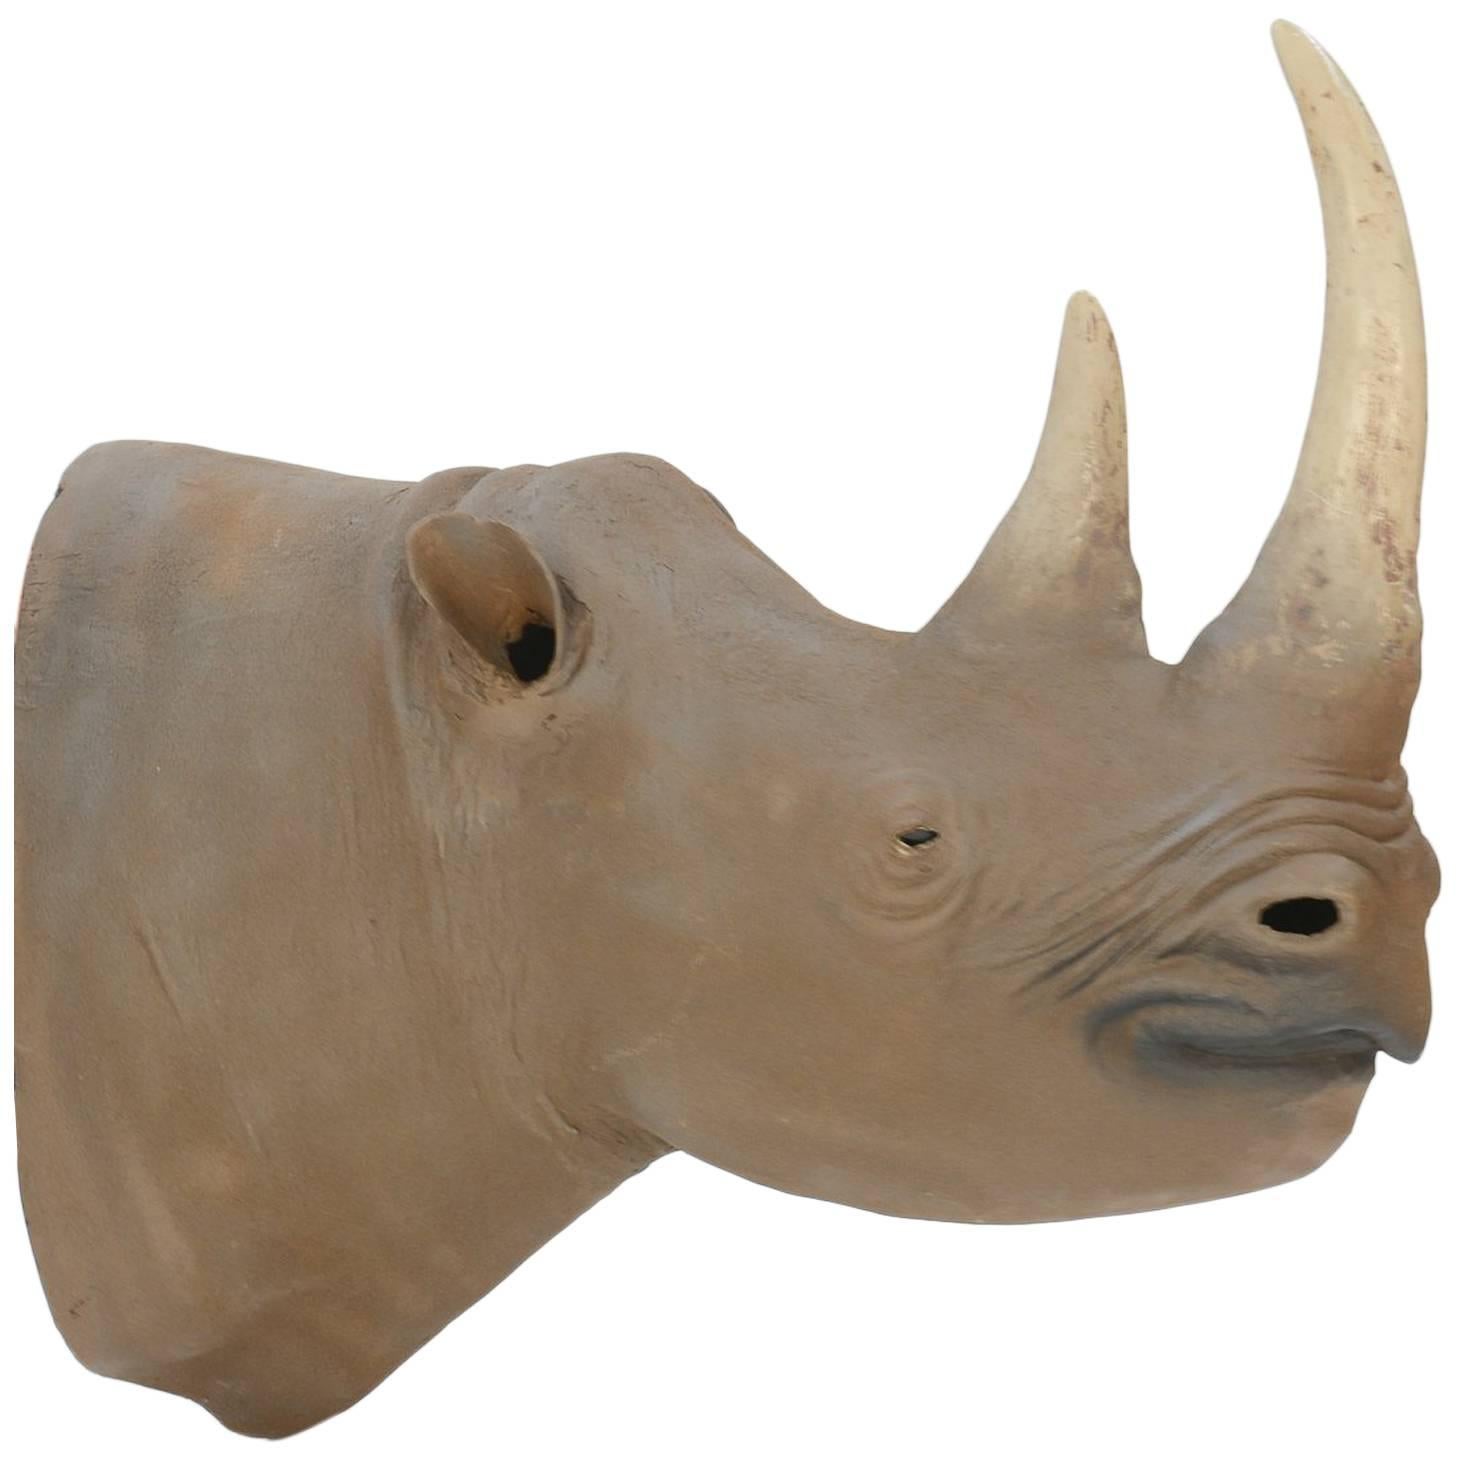 1950s Museum Full Scale African Black Rhinoceros Model